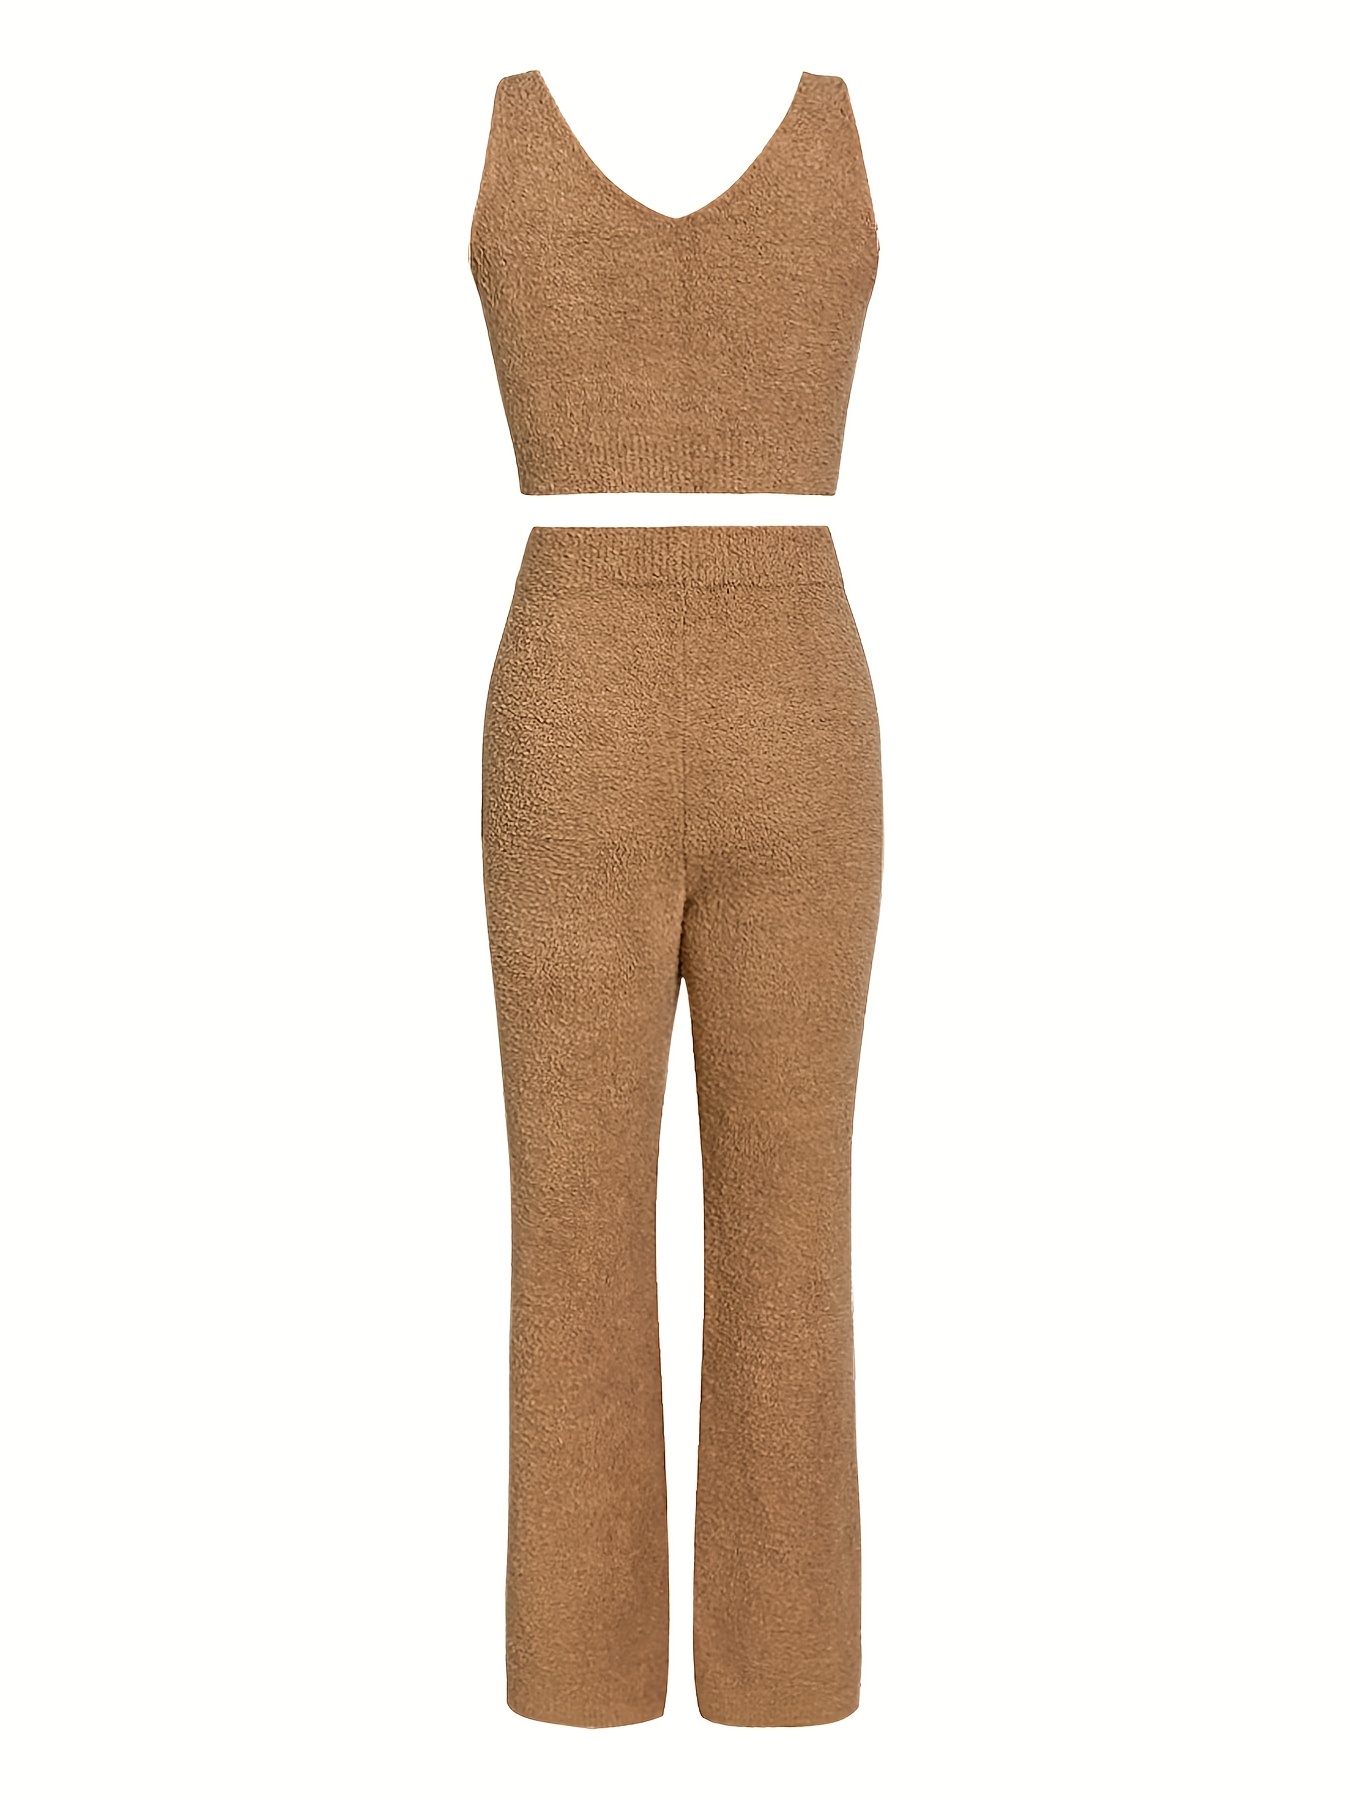 Skims Women's Cozy Knit Tank Crop Top Brown Size S/M